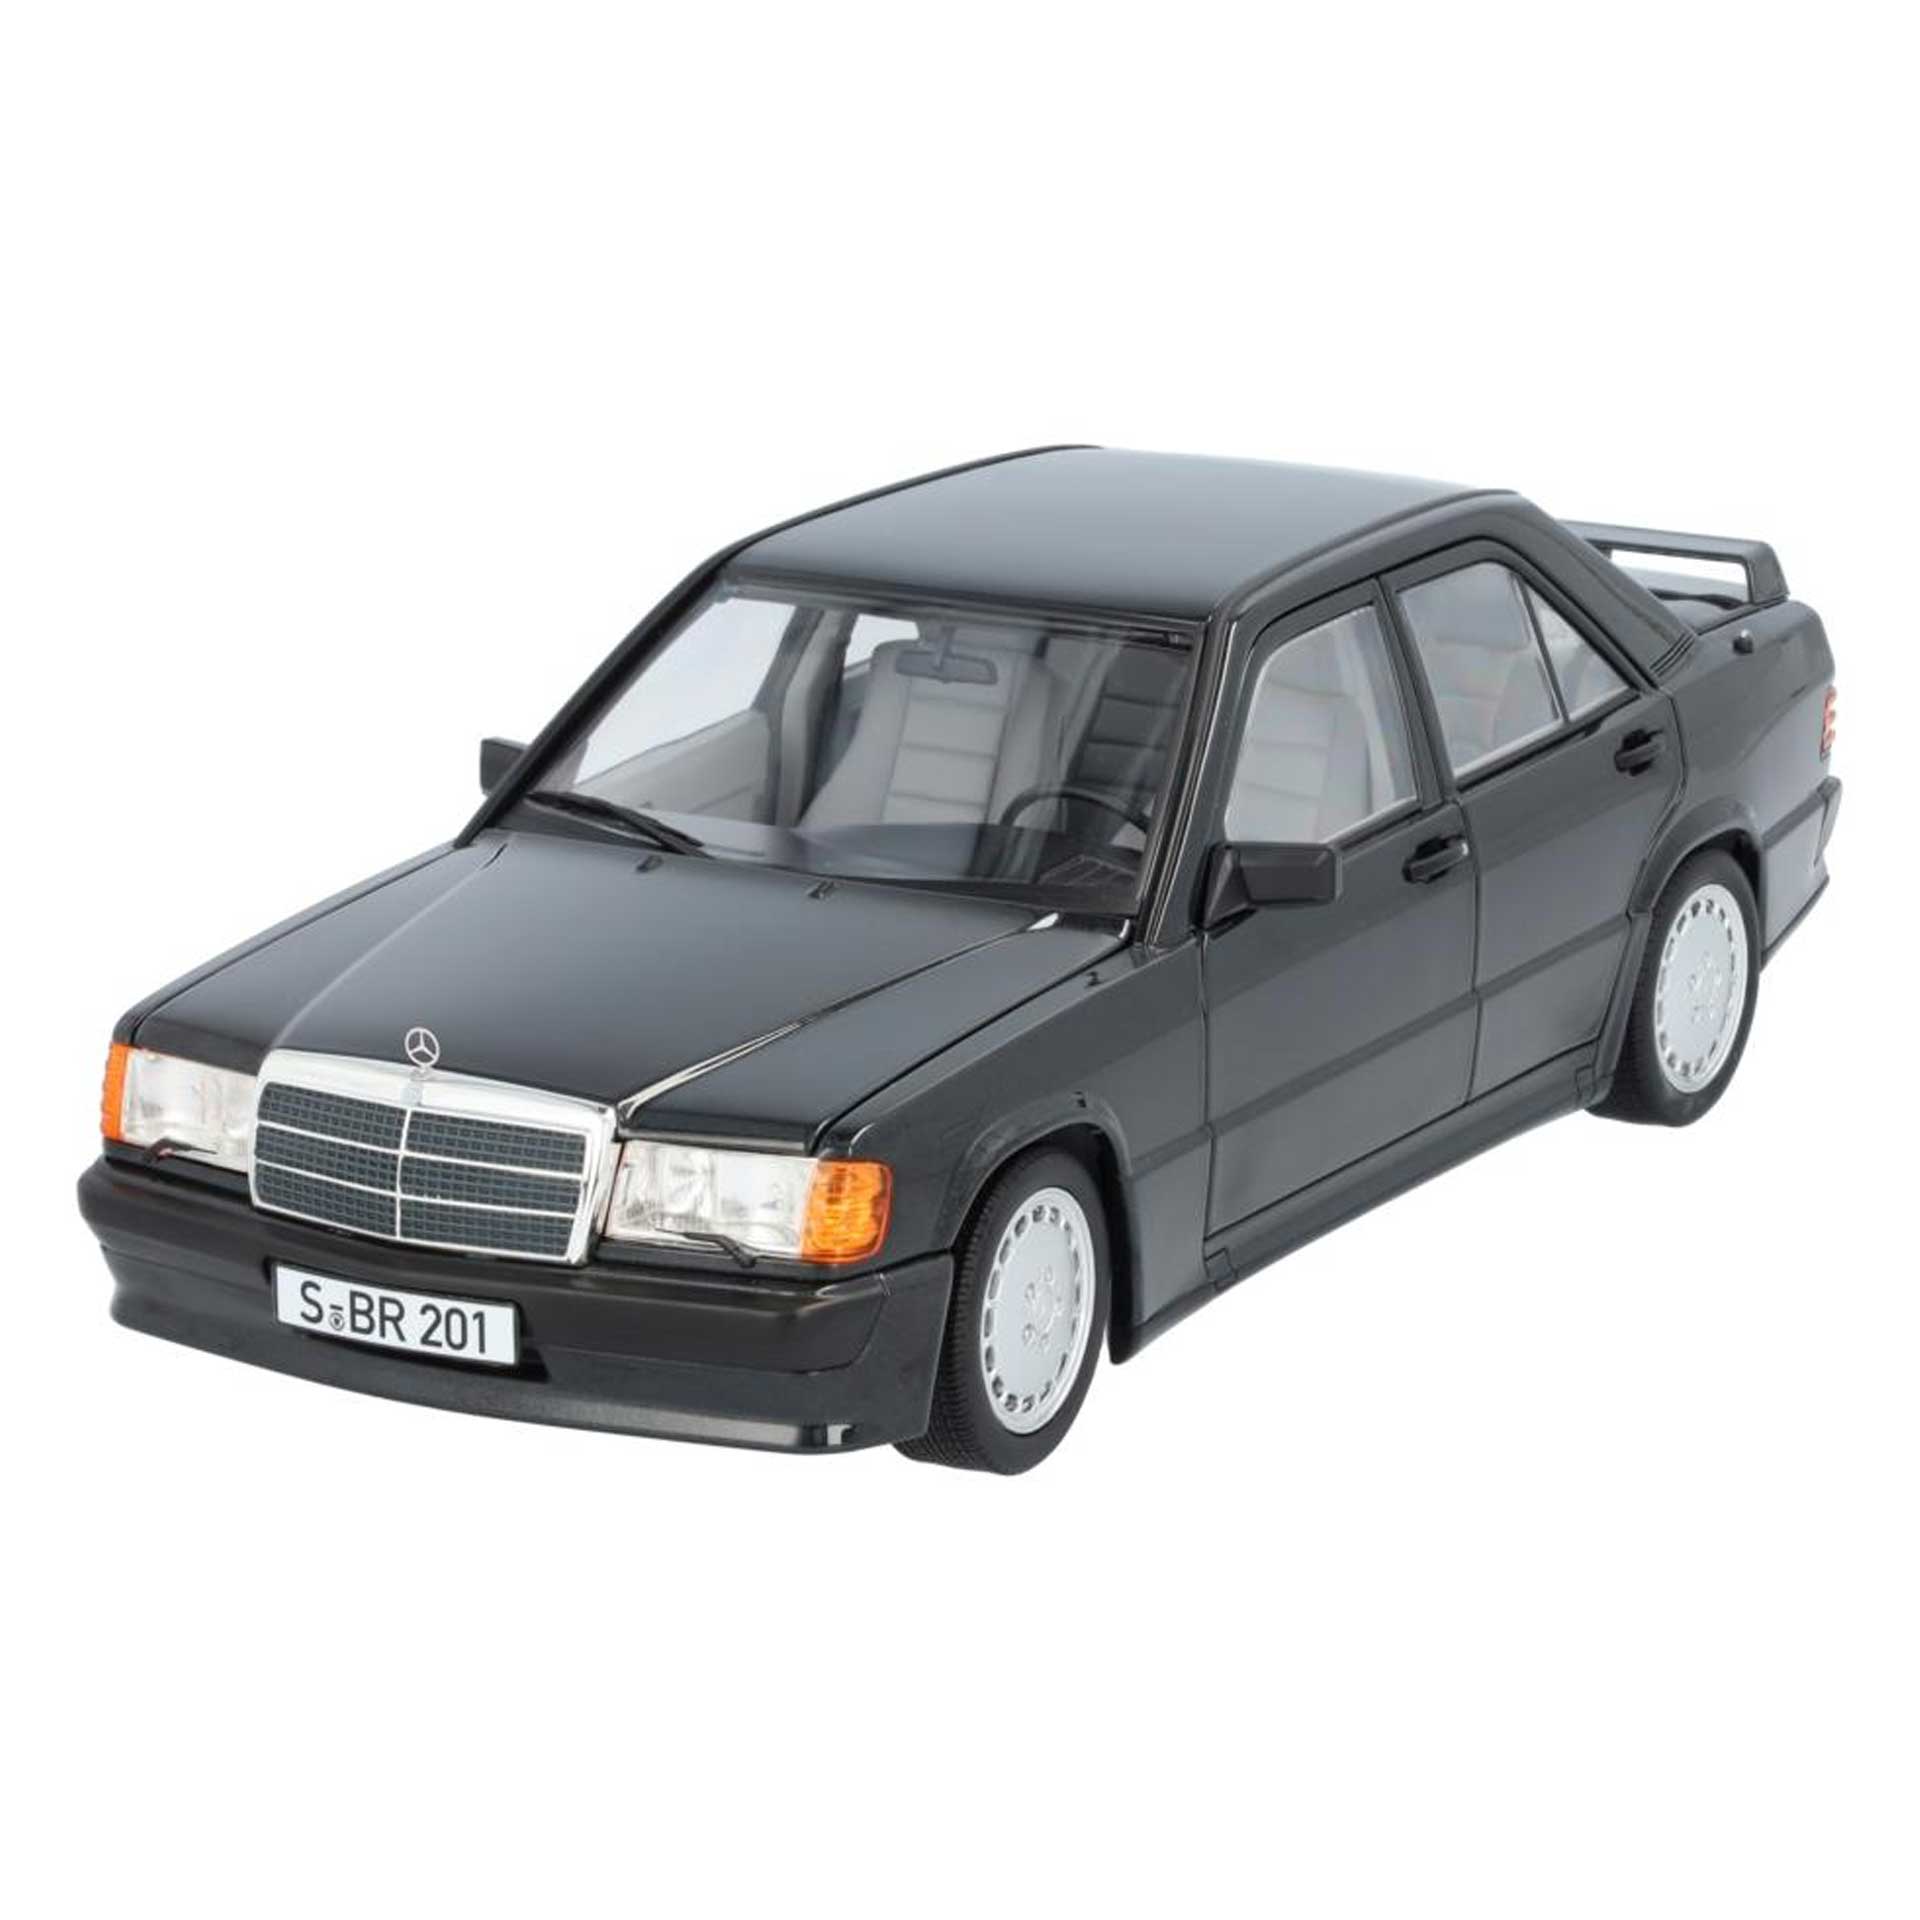 Mercedes-Benz 190 E 2.3-16 W 201 (1984-1988) Modellauto 1:18 blauschwarz